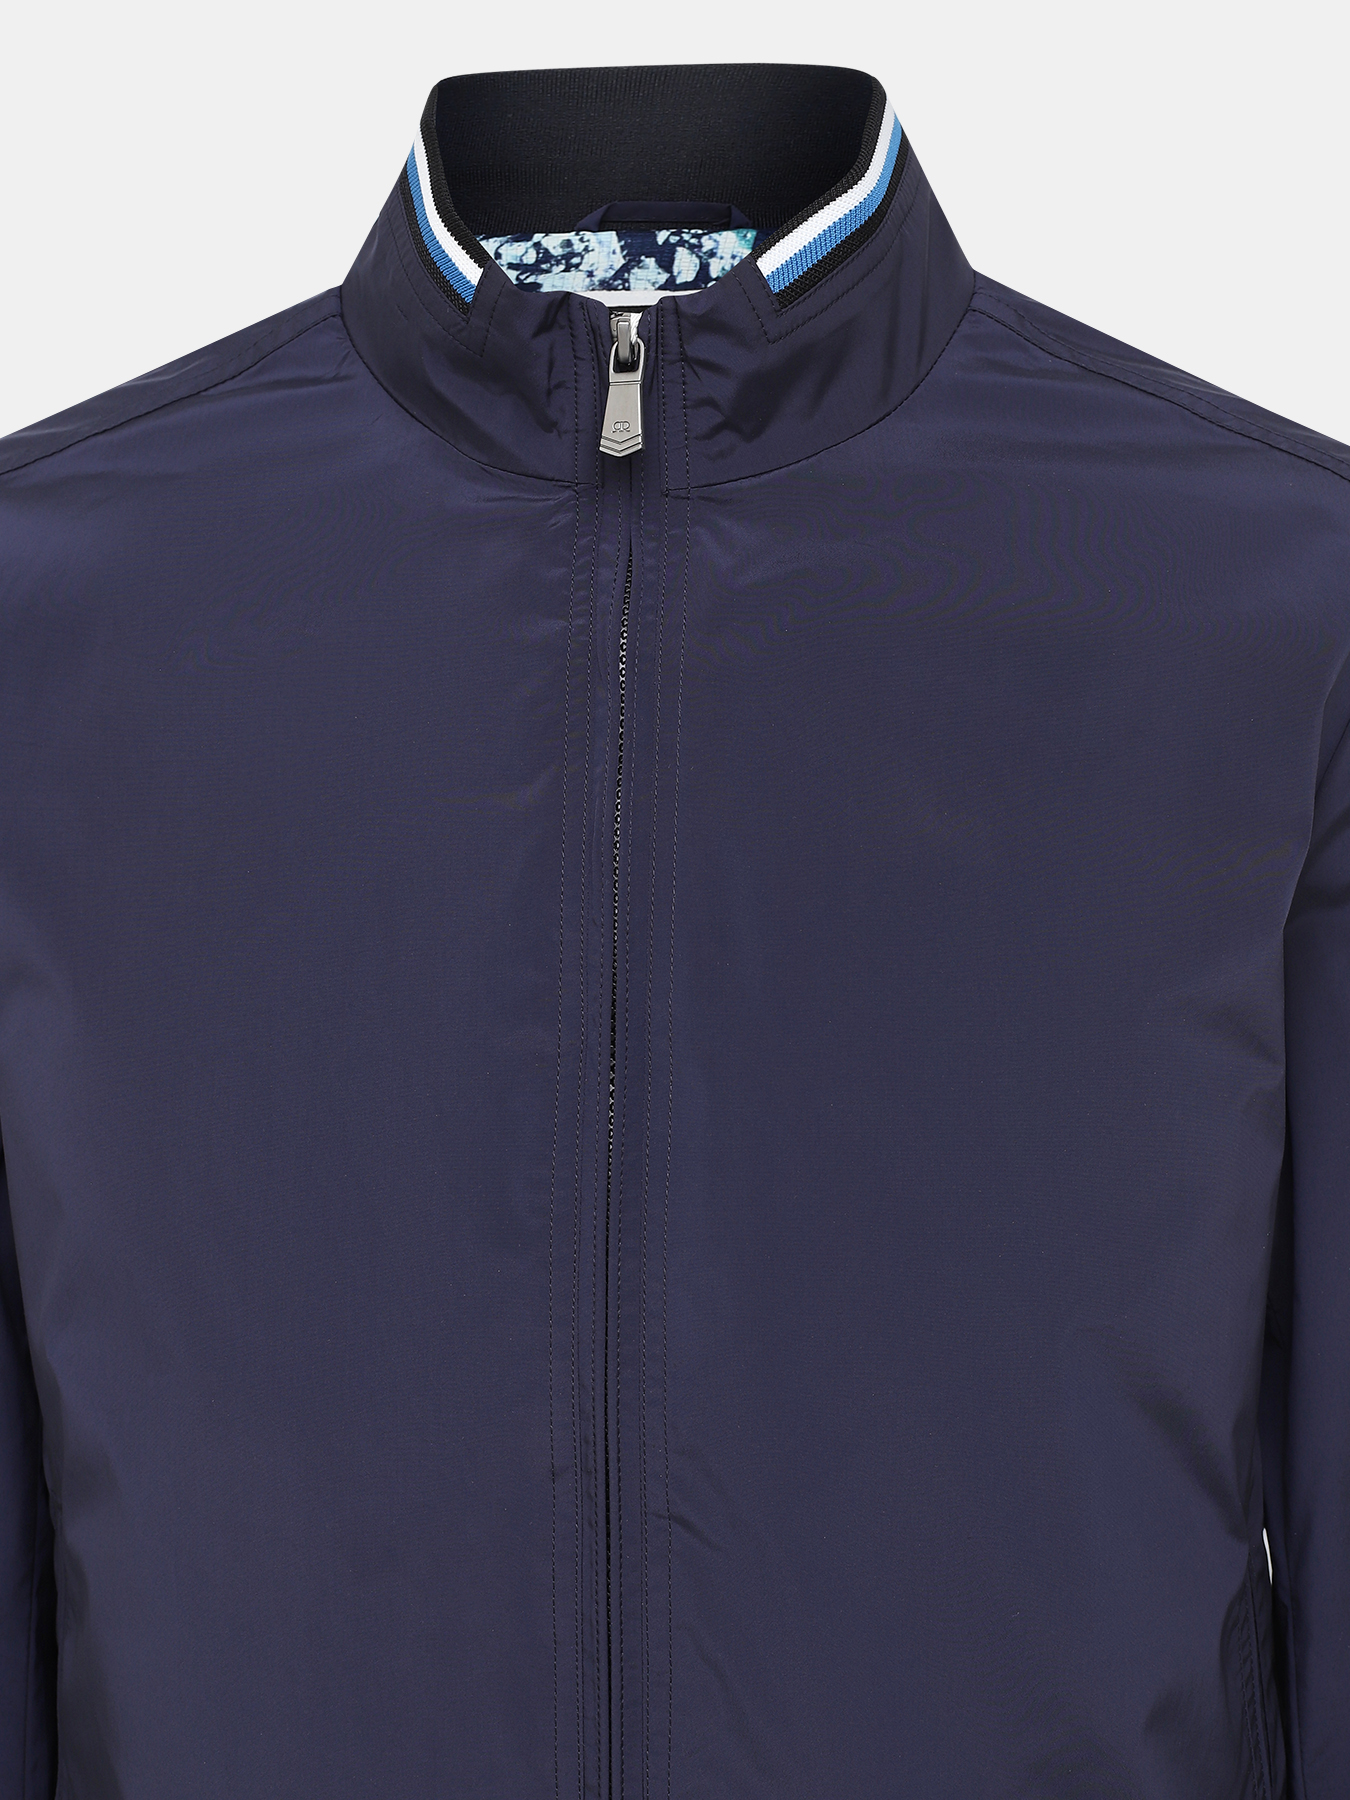 Куртка Ritter 402899-024, цвет синий, размер 46 - фото 2